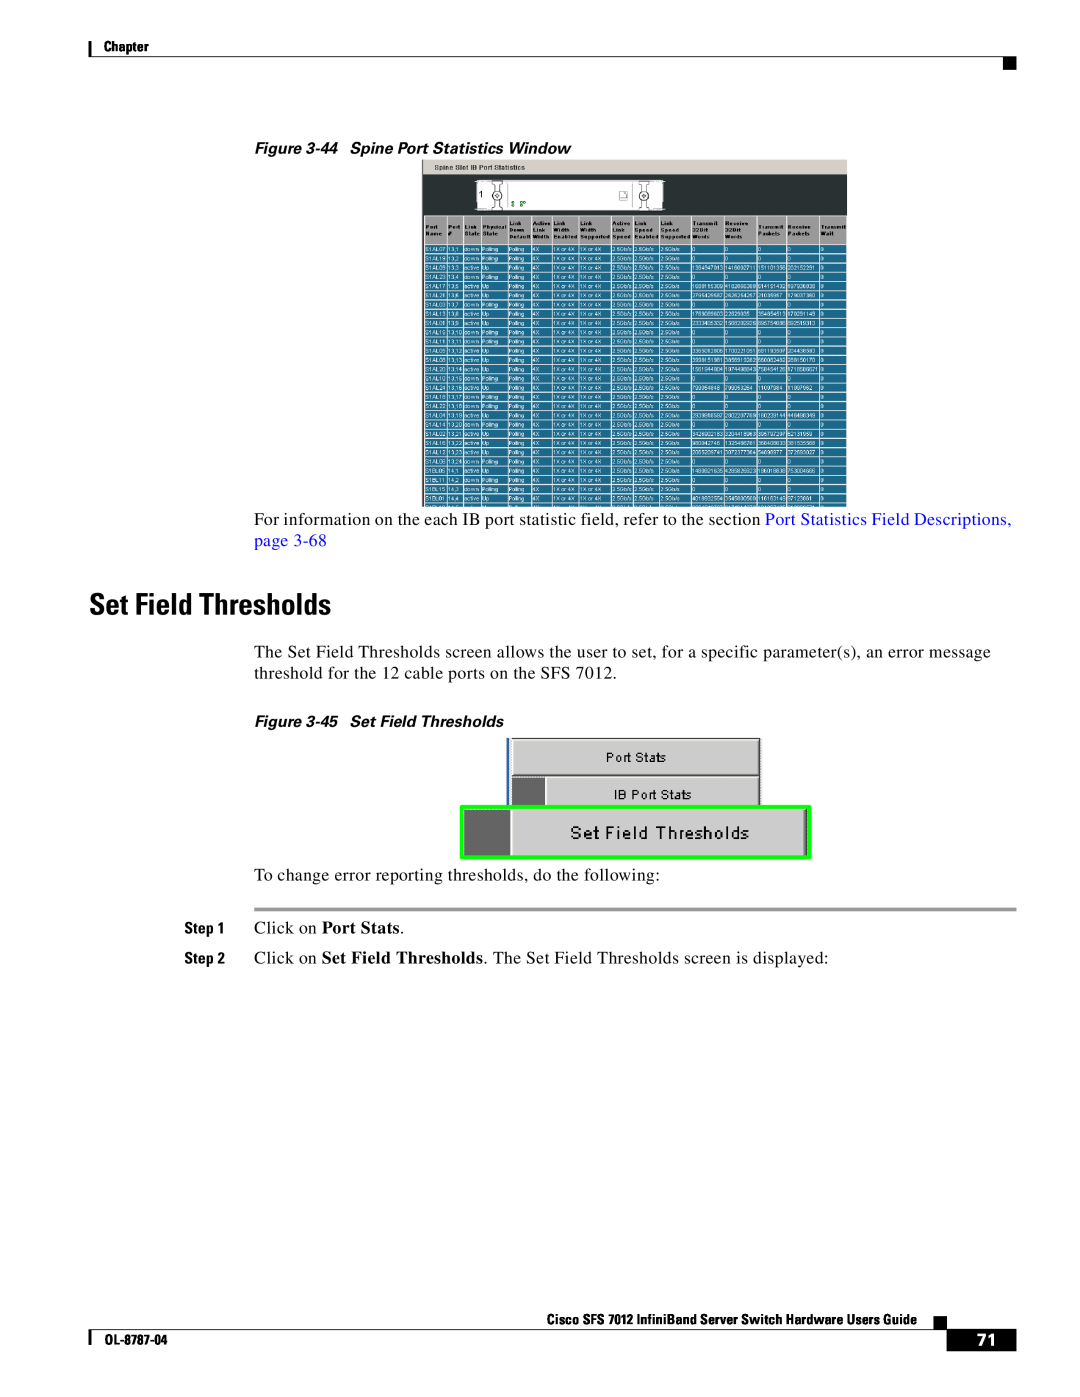 Cisco Systems SFS 7012 manual 44 Spine Port Statistics Window, 45 Set Field Thresholds 